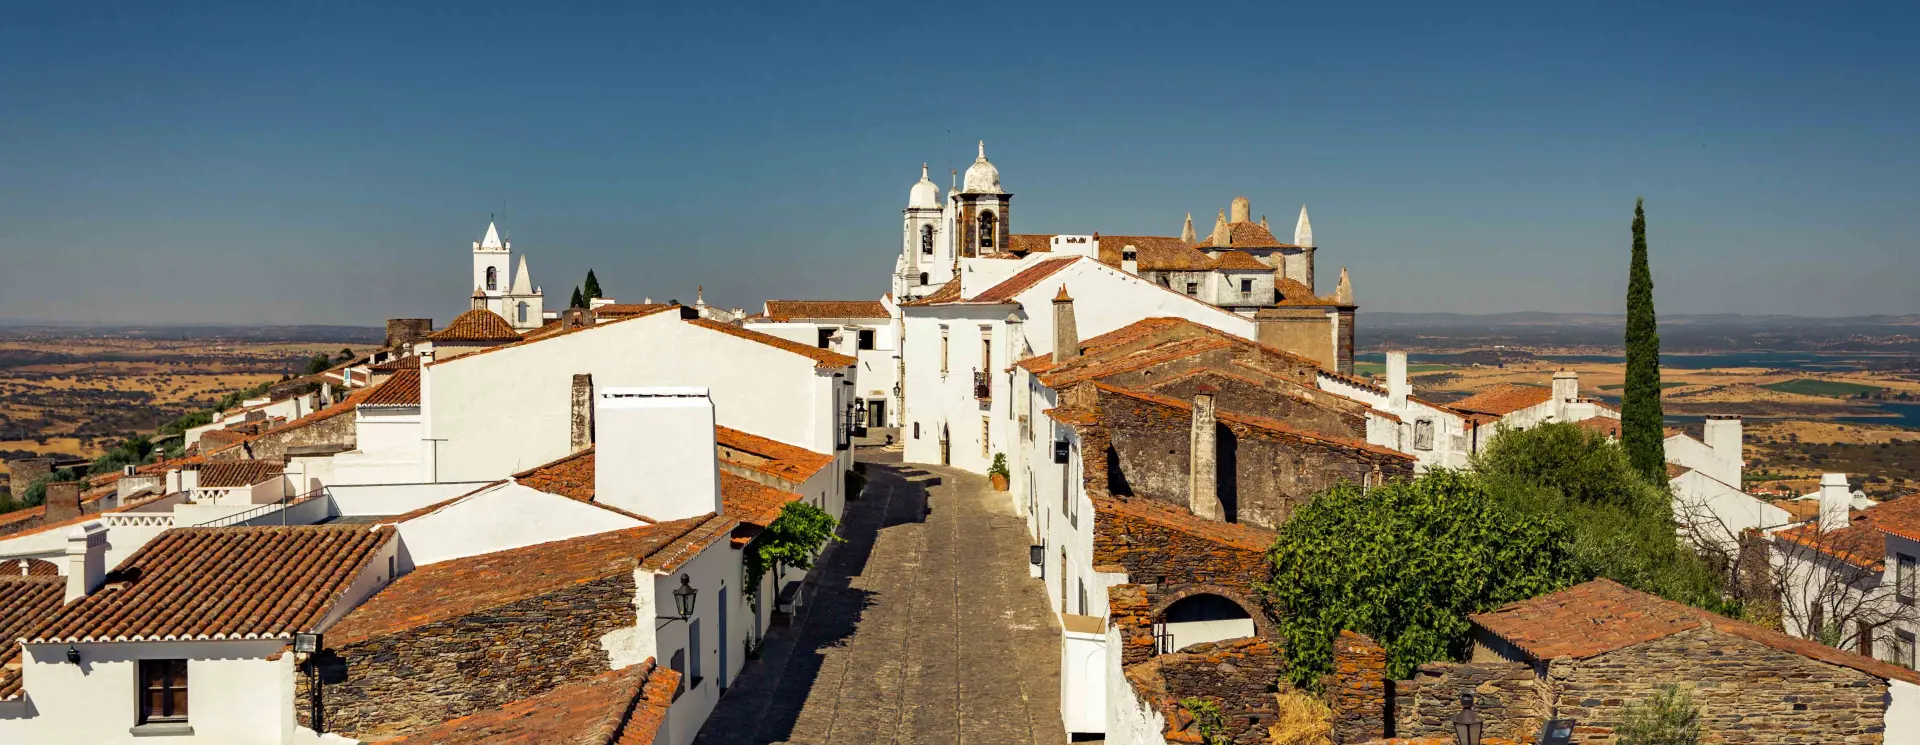 cover de witte dorpen van de portugese alentejo betoverend mooi